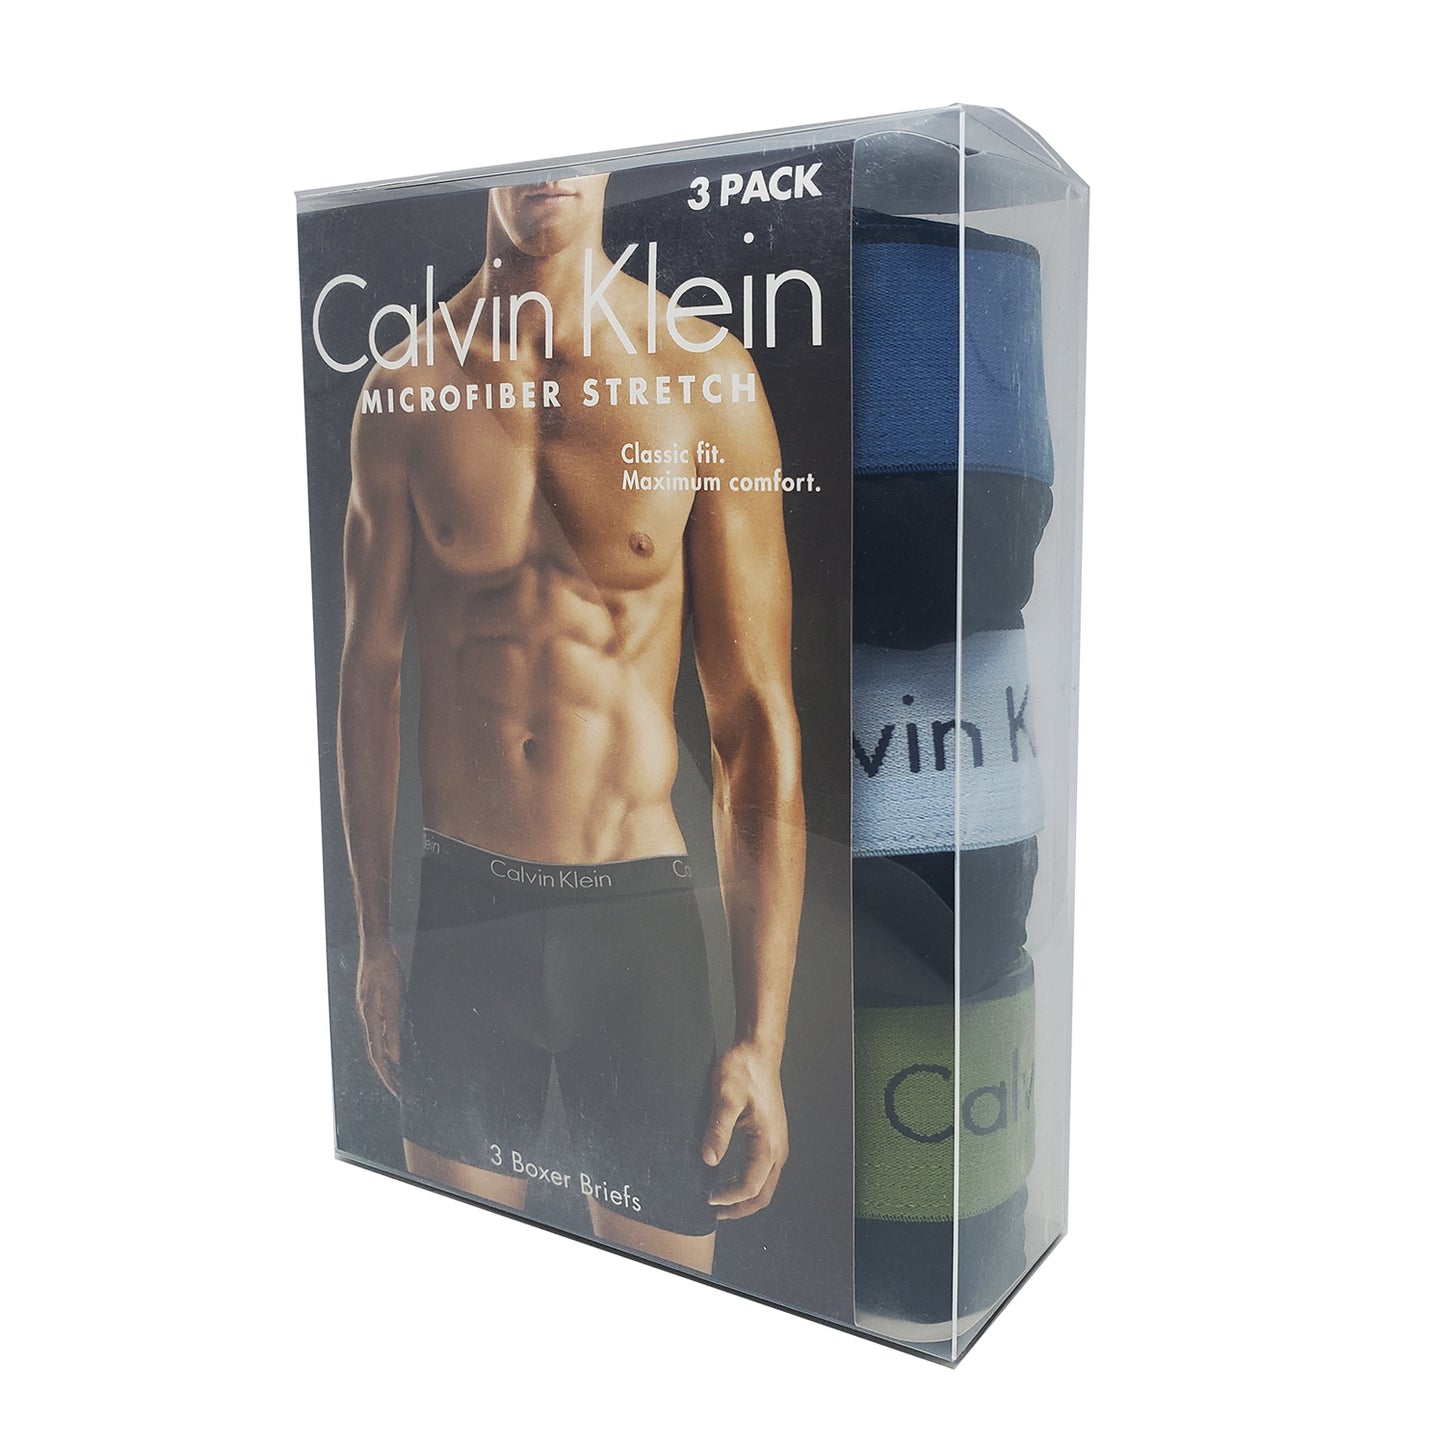 Calvin Klein Microfiber Stretch 3-Pack Boxer Brief Black - NB1290458